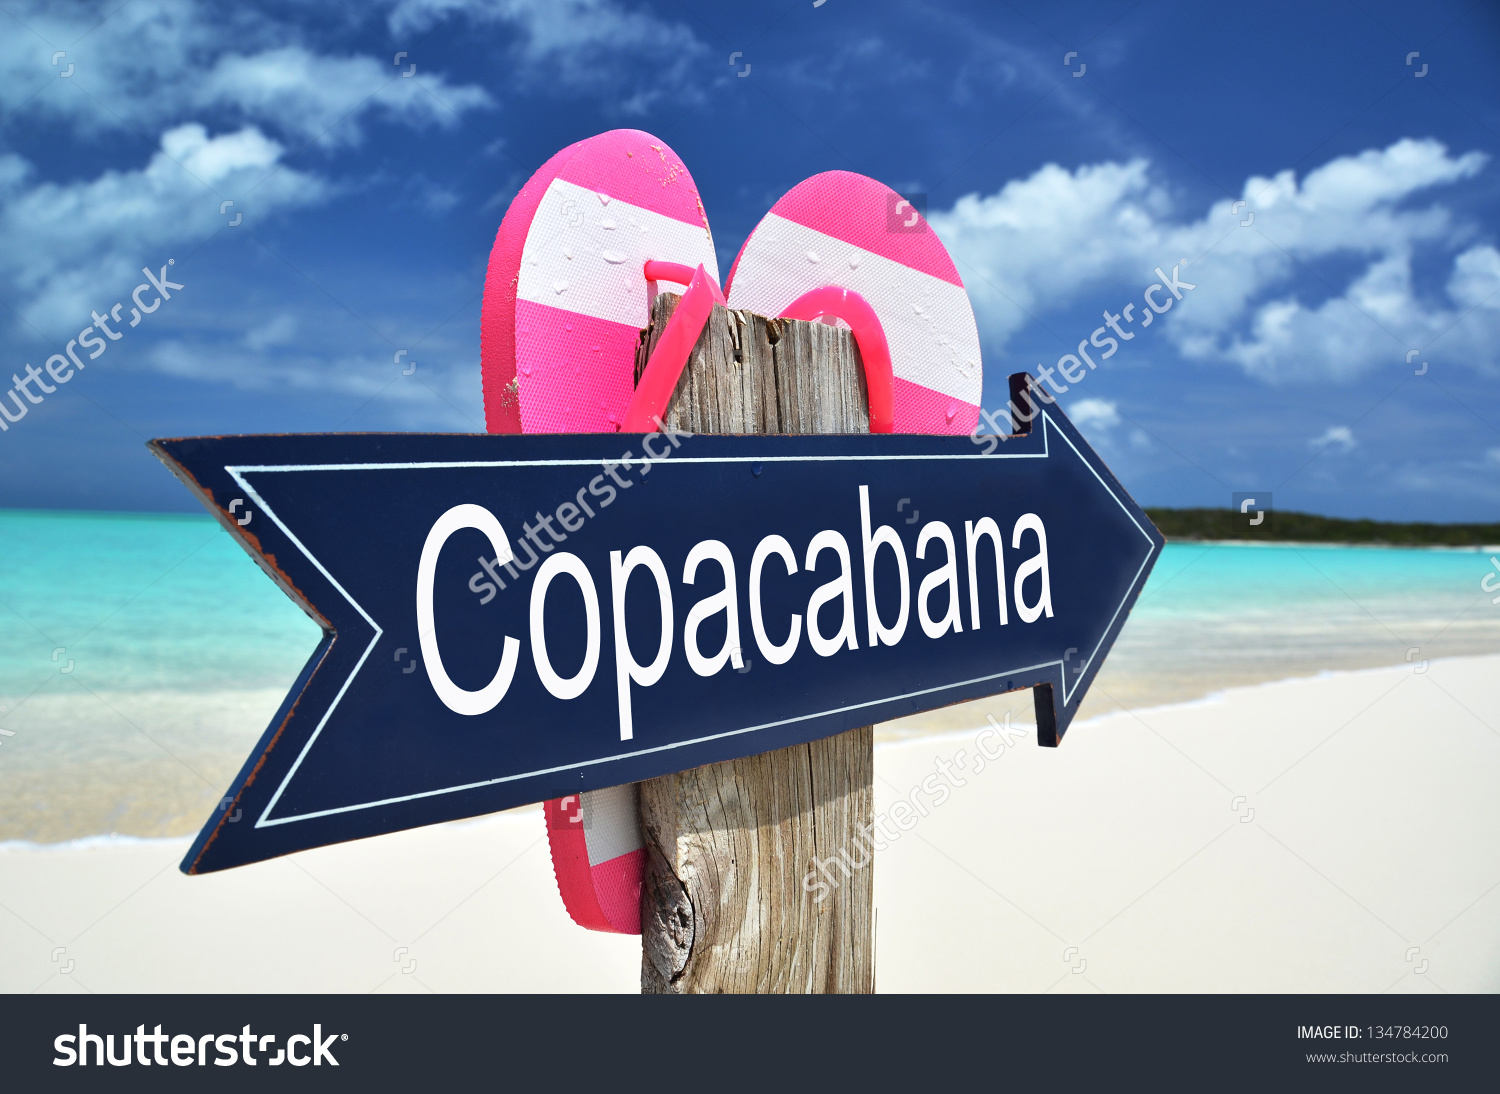 Copacabana Sign On Beach Stock Photo 134784200.